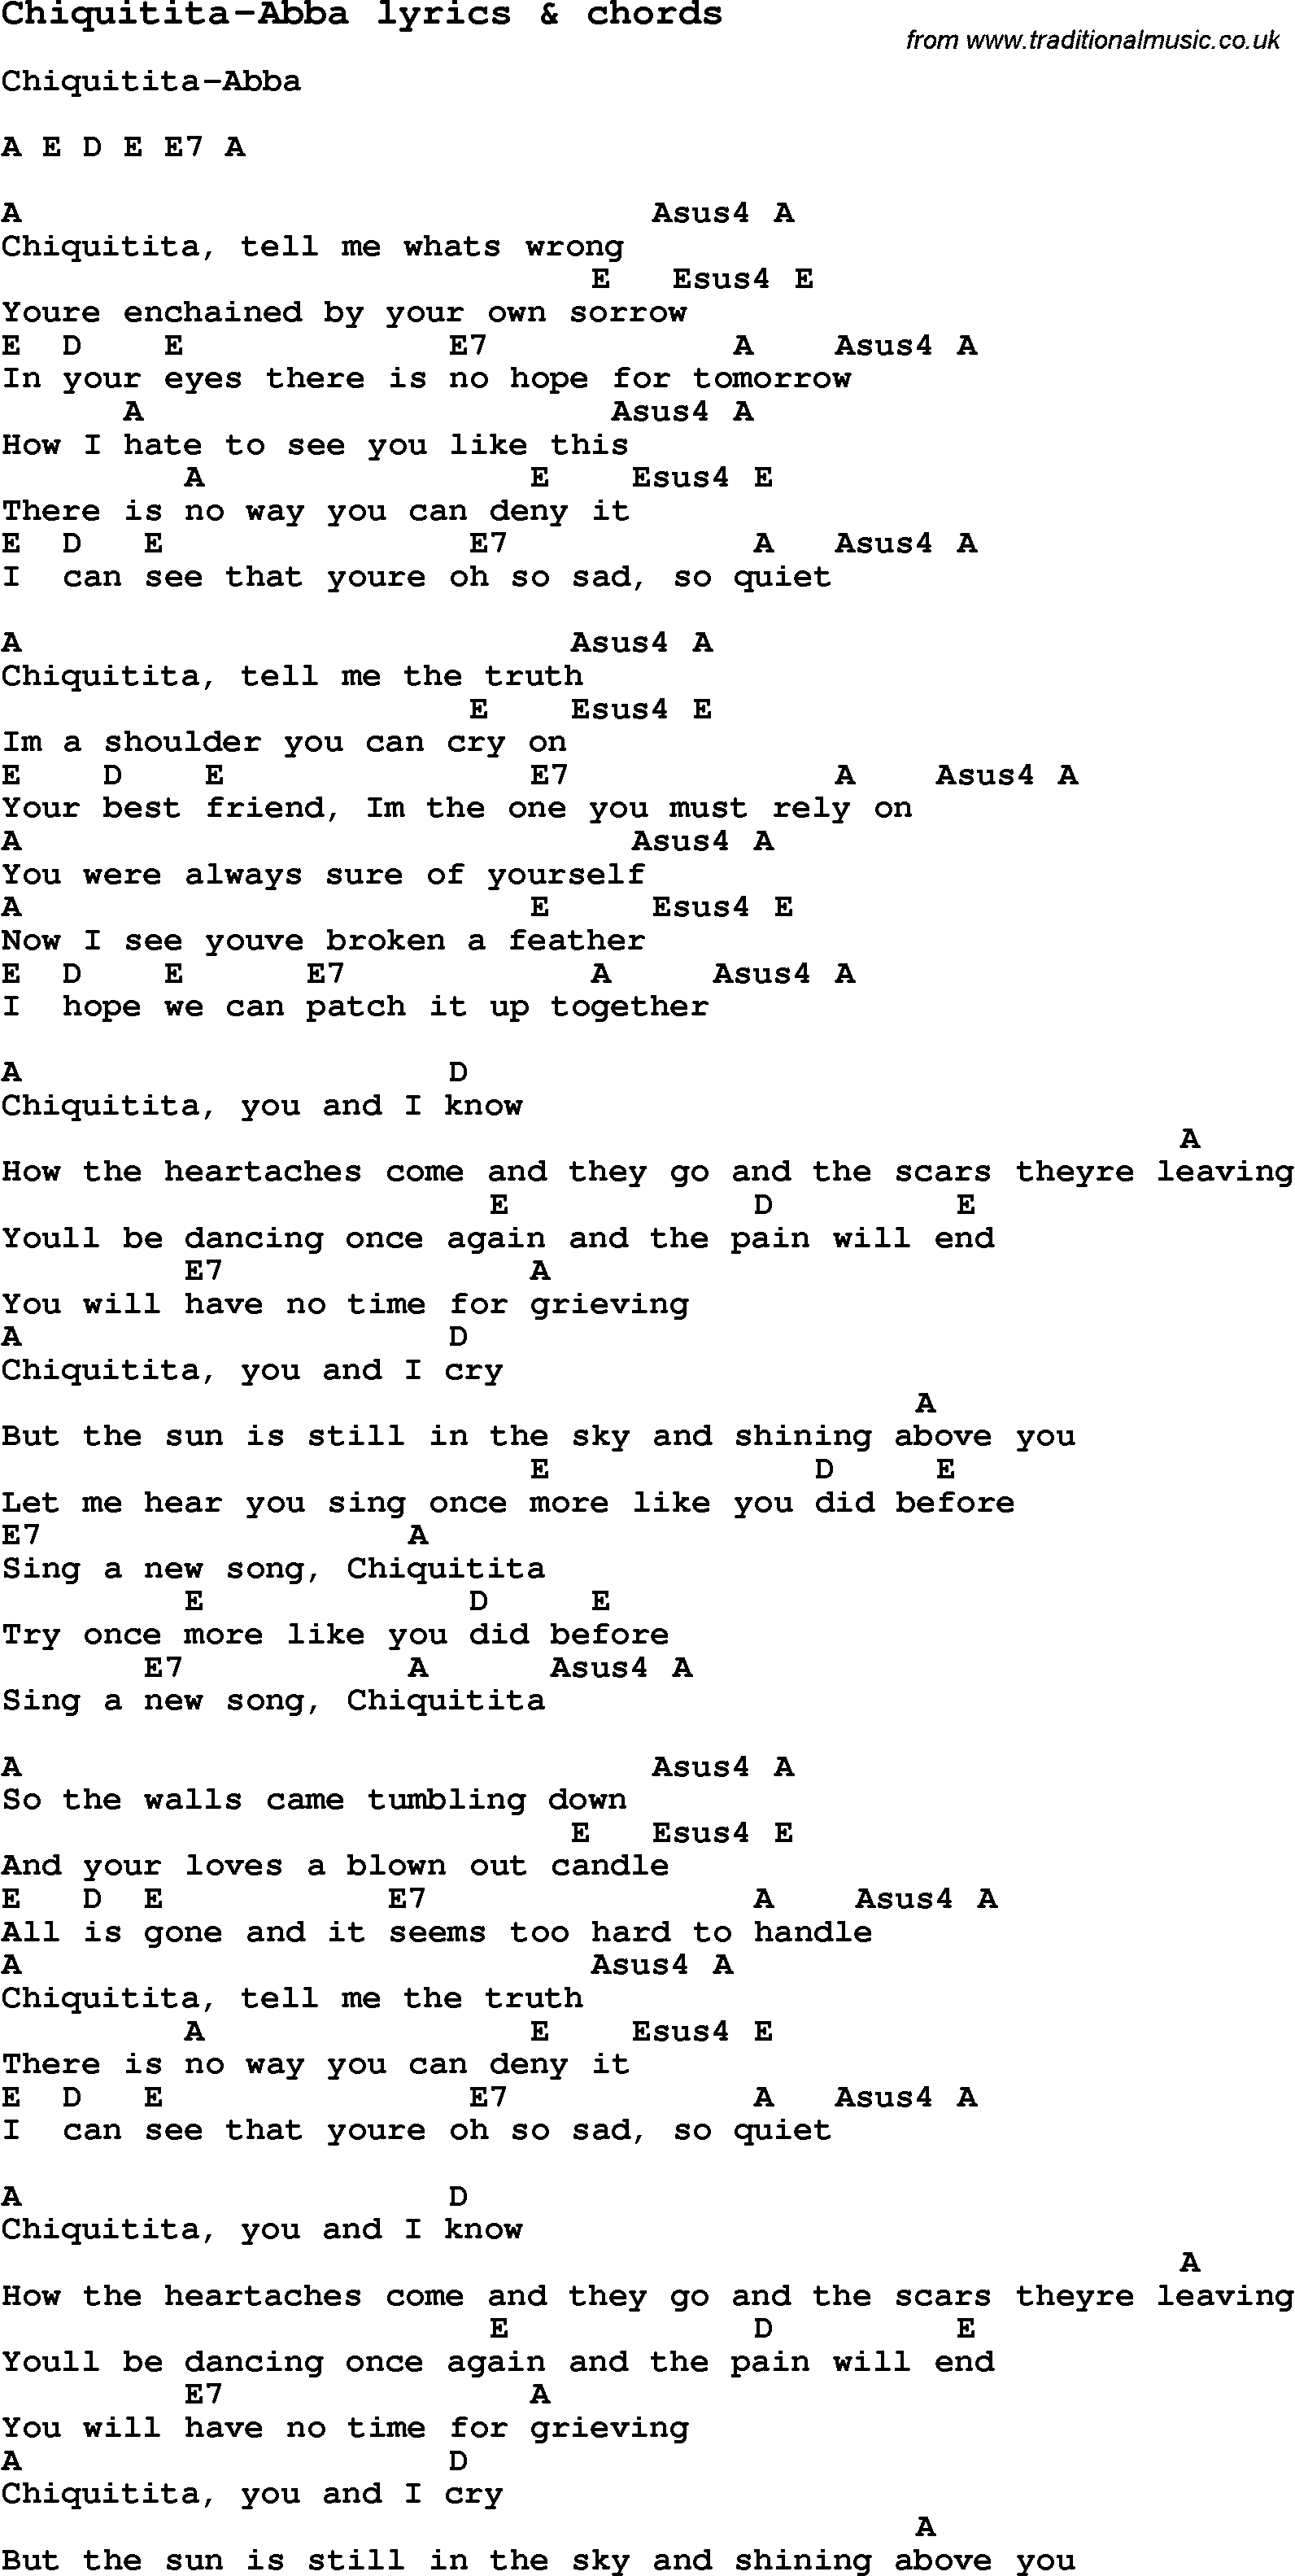 Love Song Lyrics for: Chiquitita-Abba with chords for Ukulele, Guitar Banjo etc.